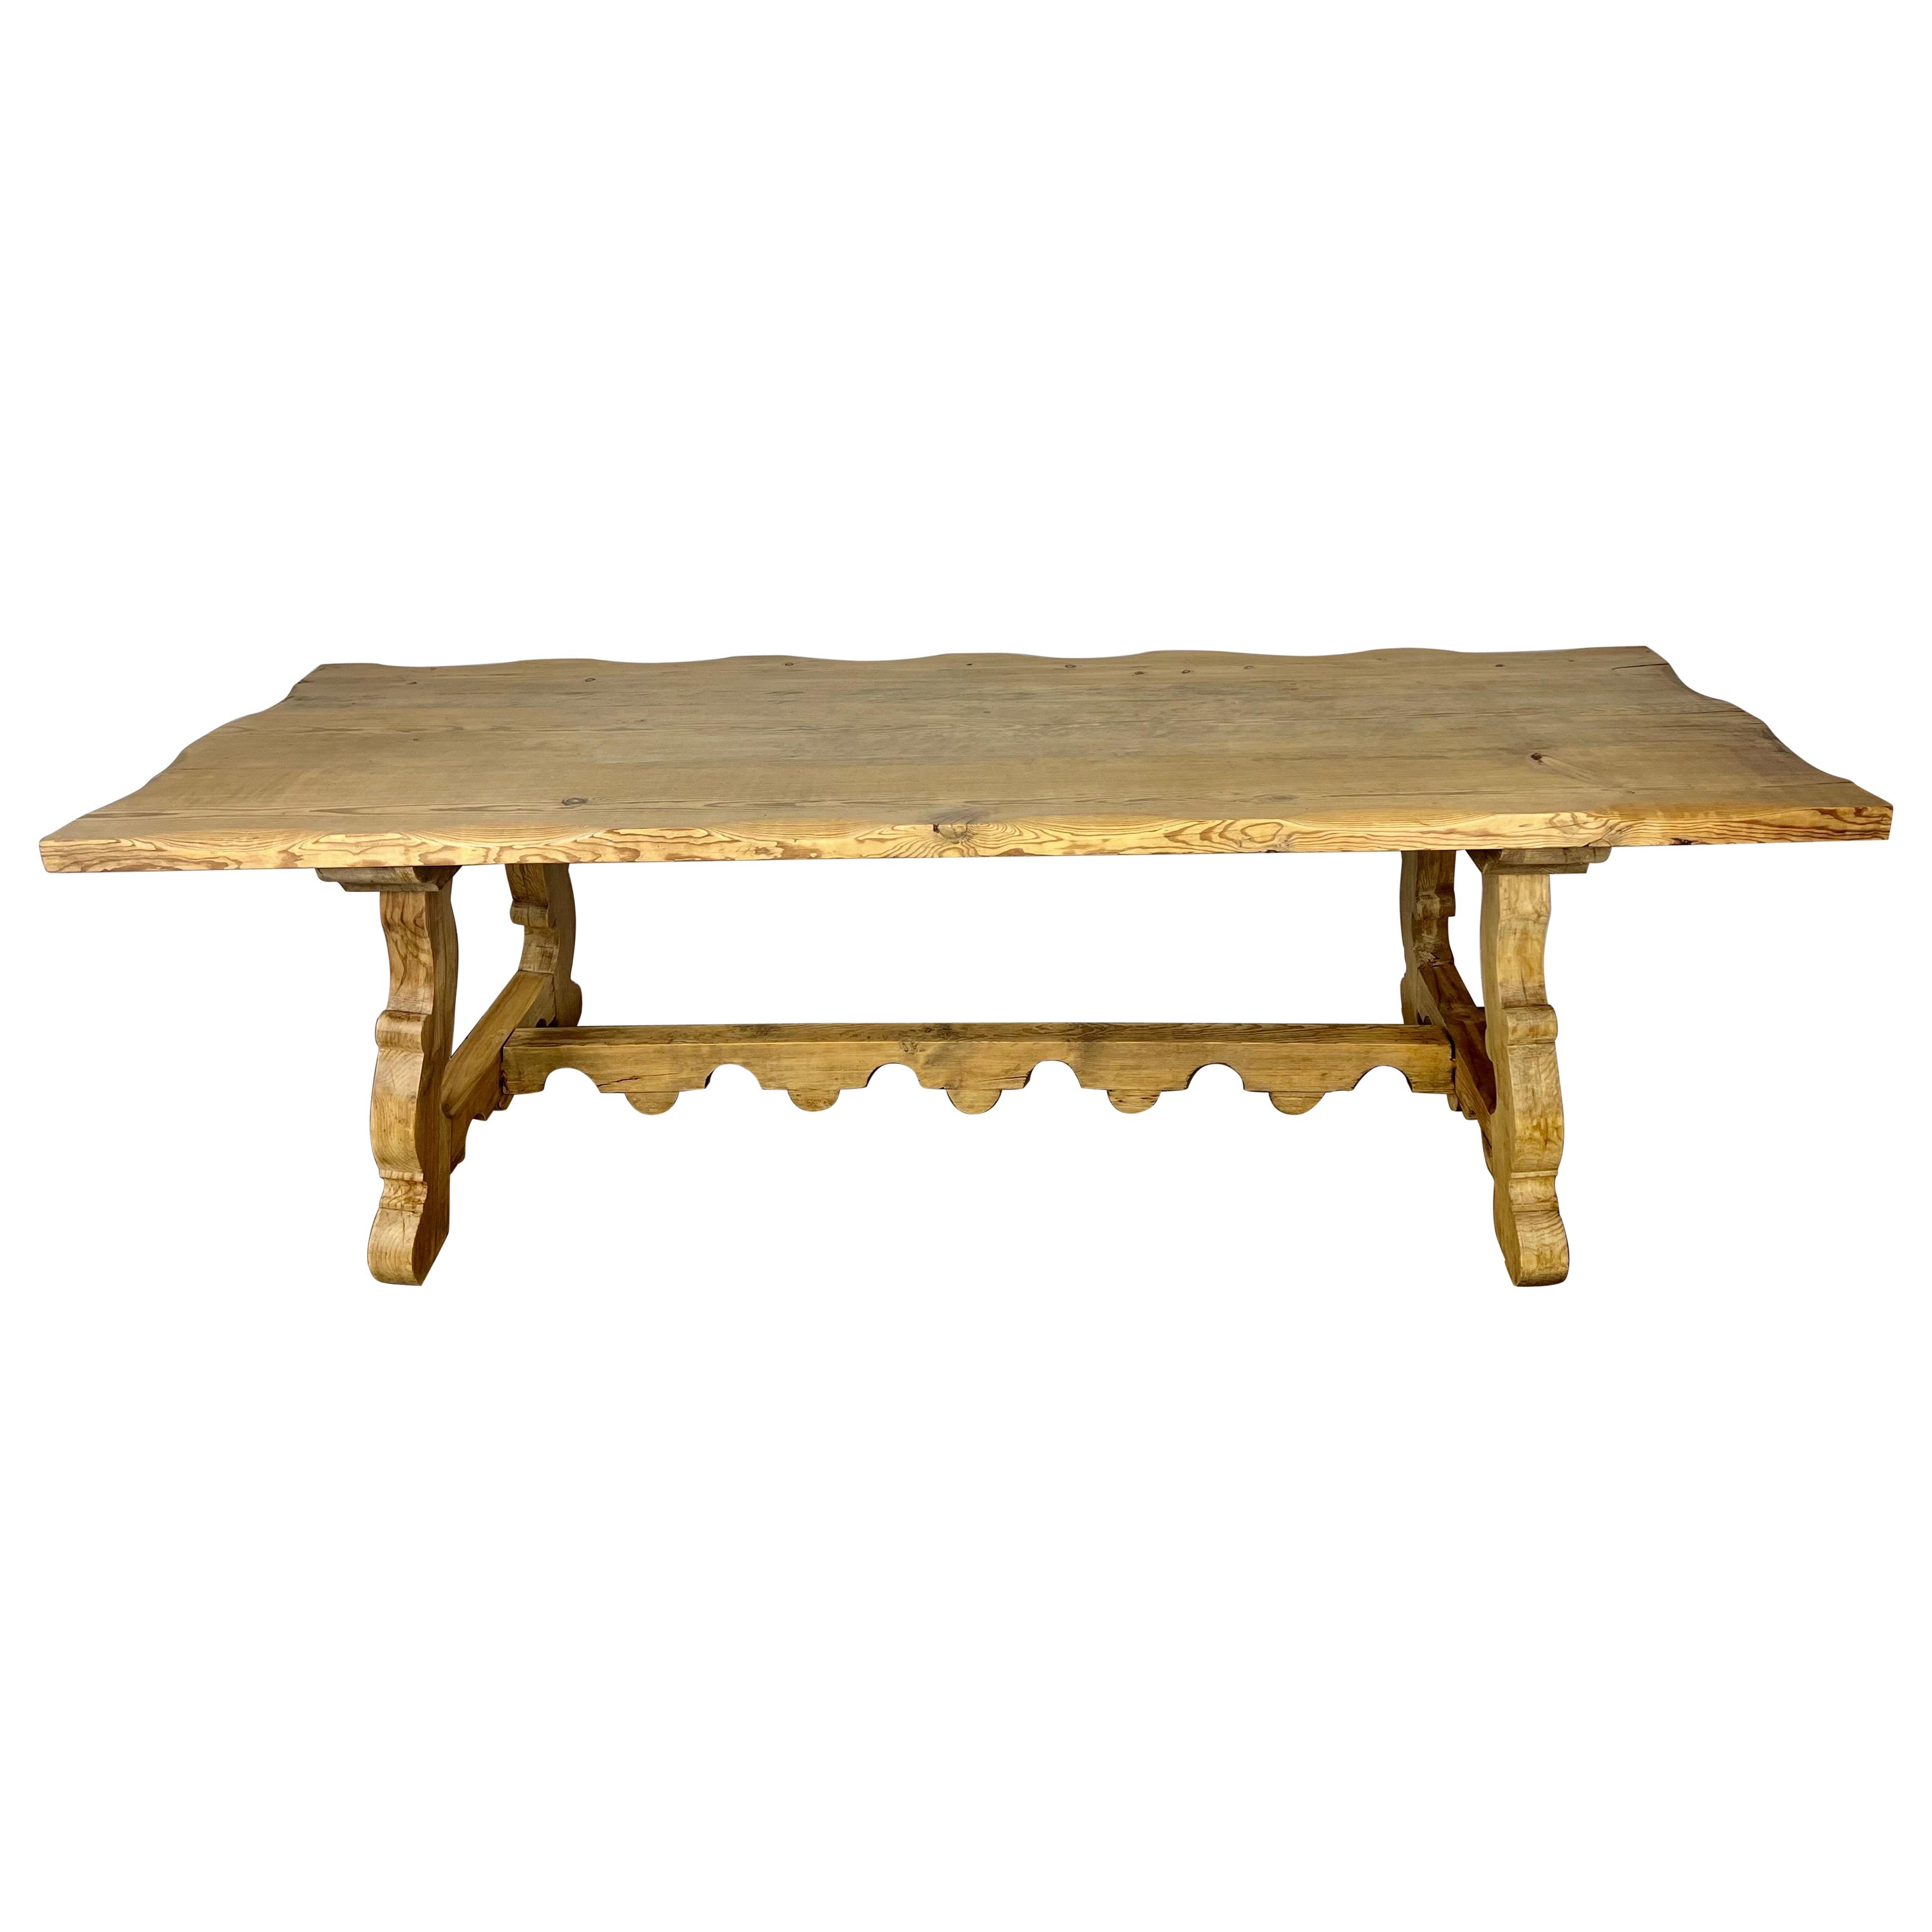 19th Century Spanish Trestle Style Table